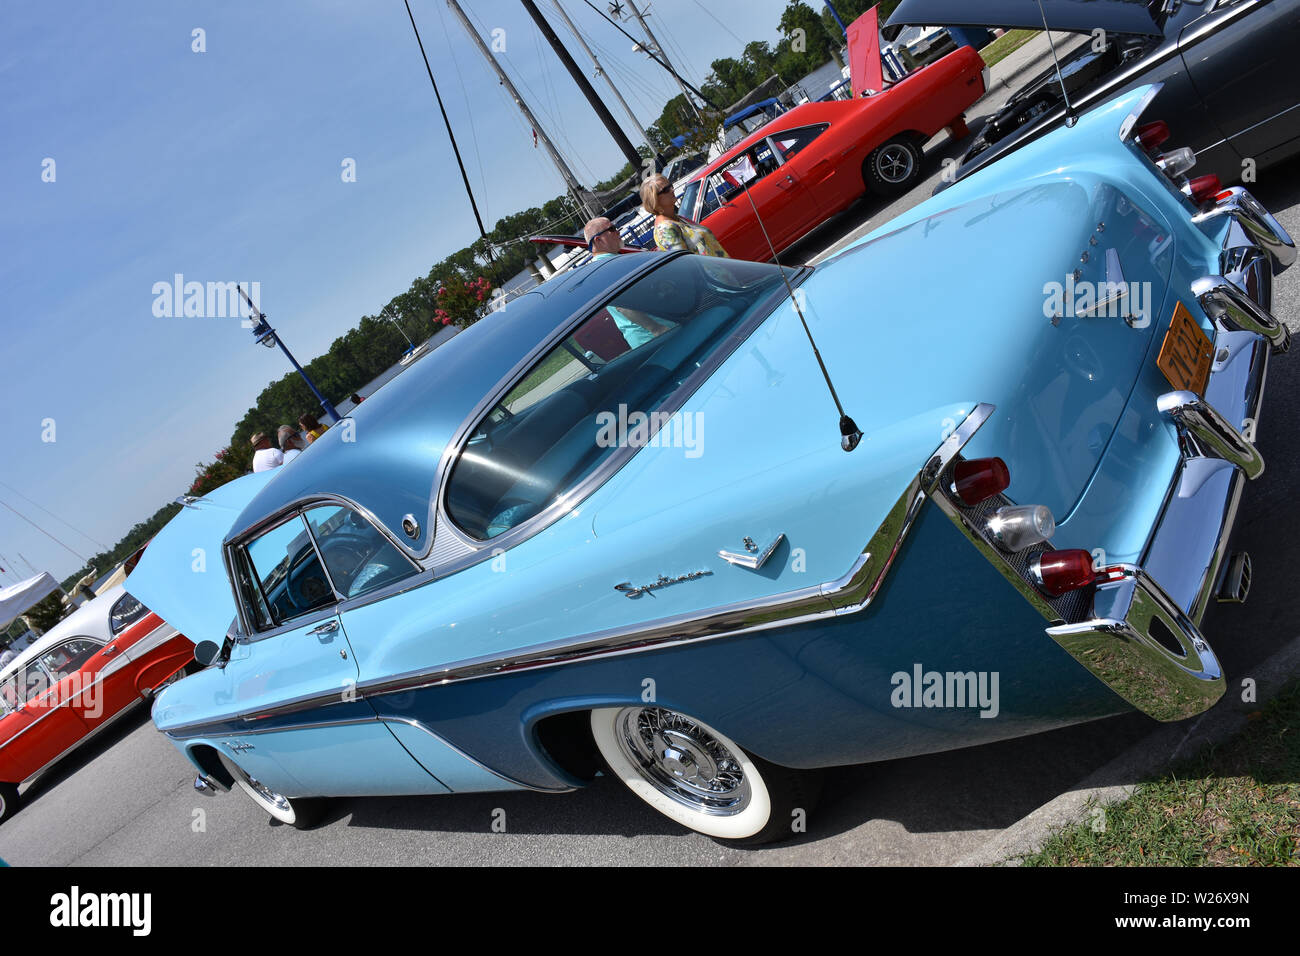 A 1956 Desoto car on display at a car show. Stock Photo